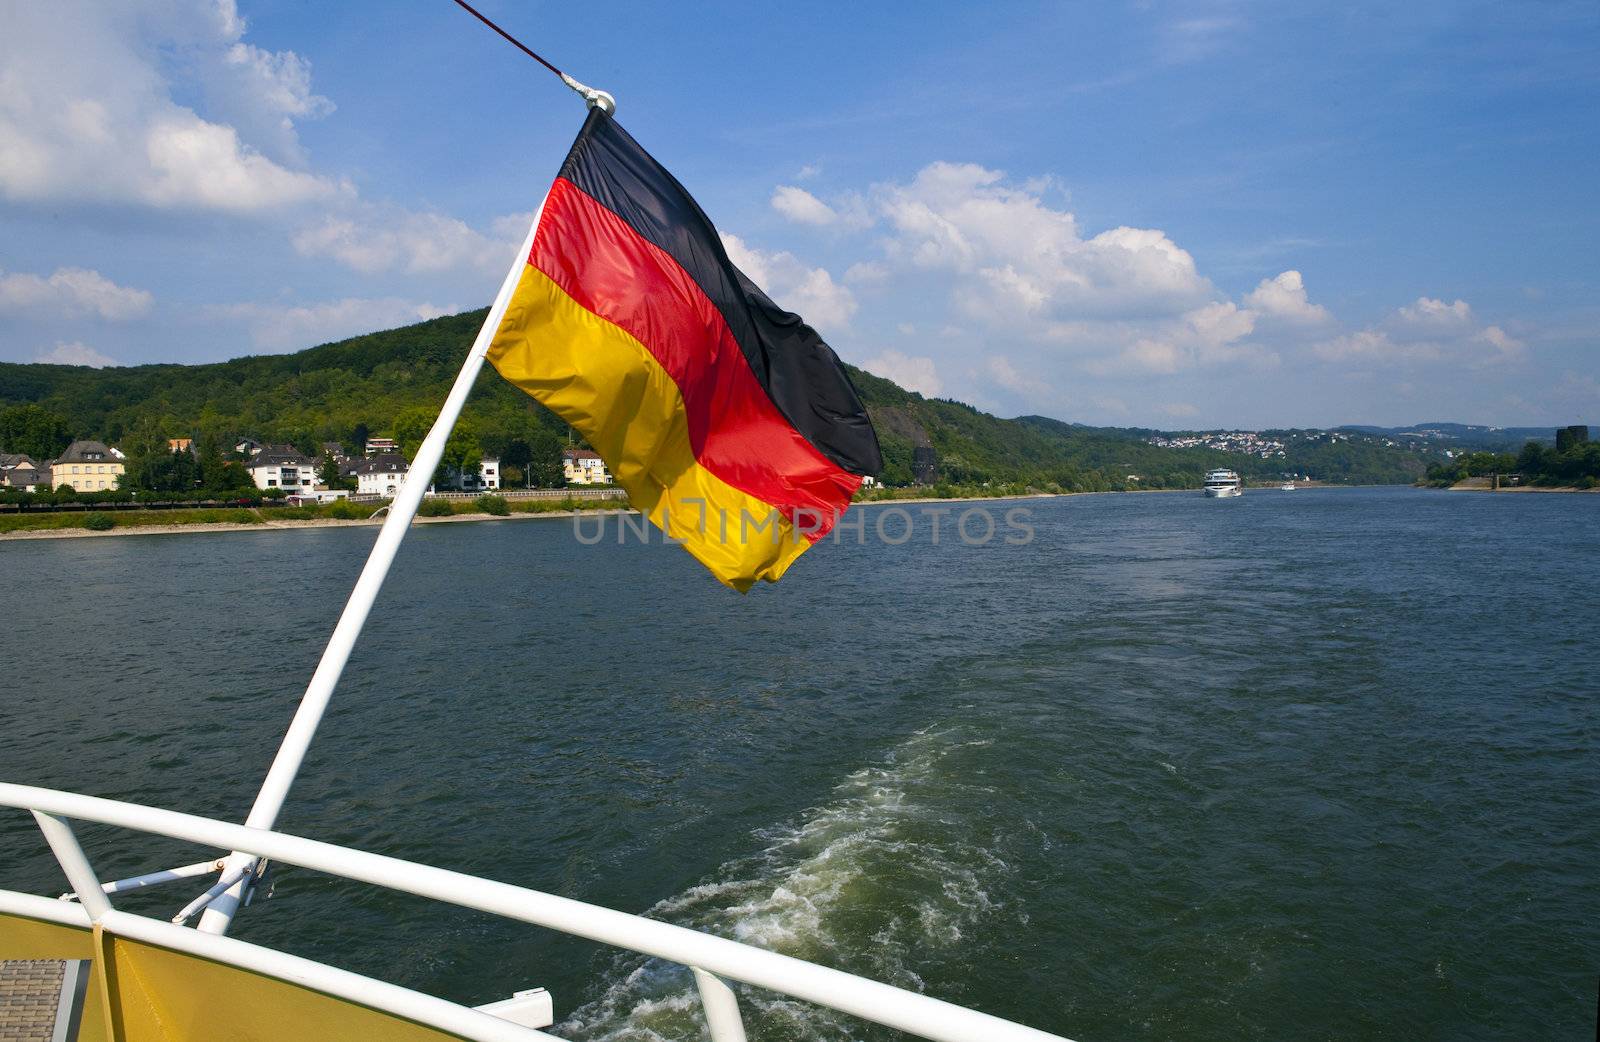 Boat Trip on the Rhine in Germany by chrisdorney